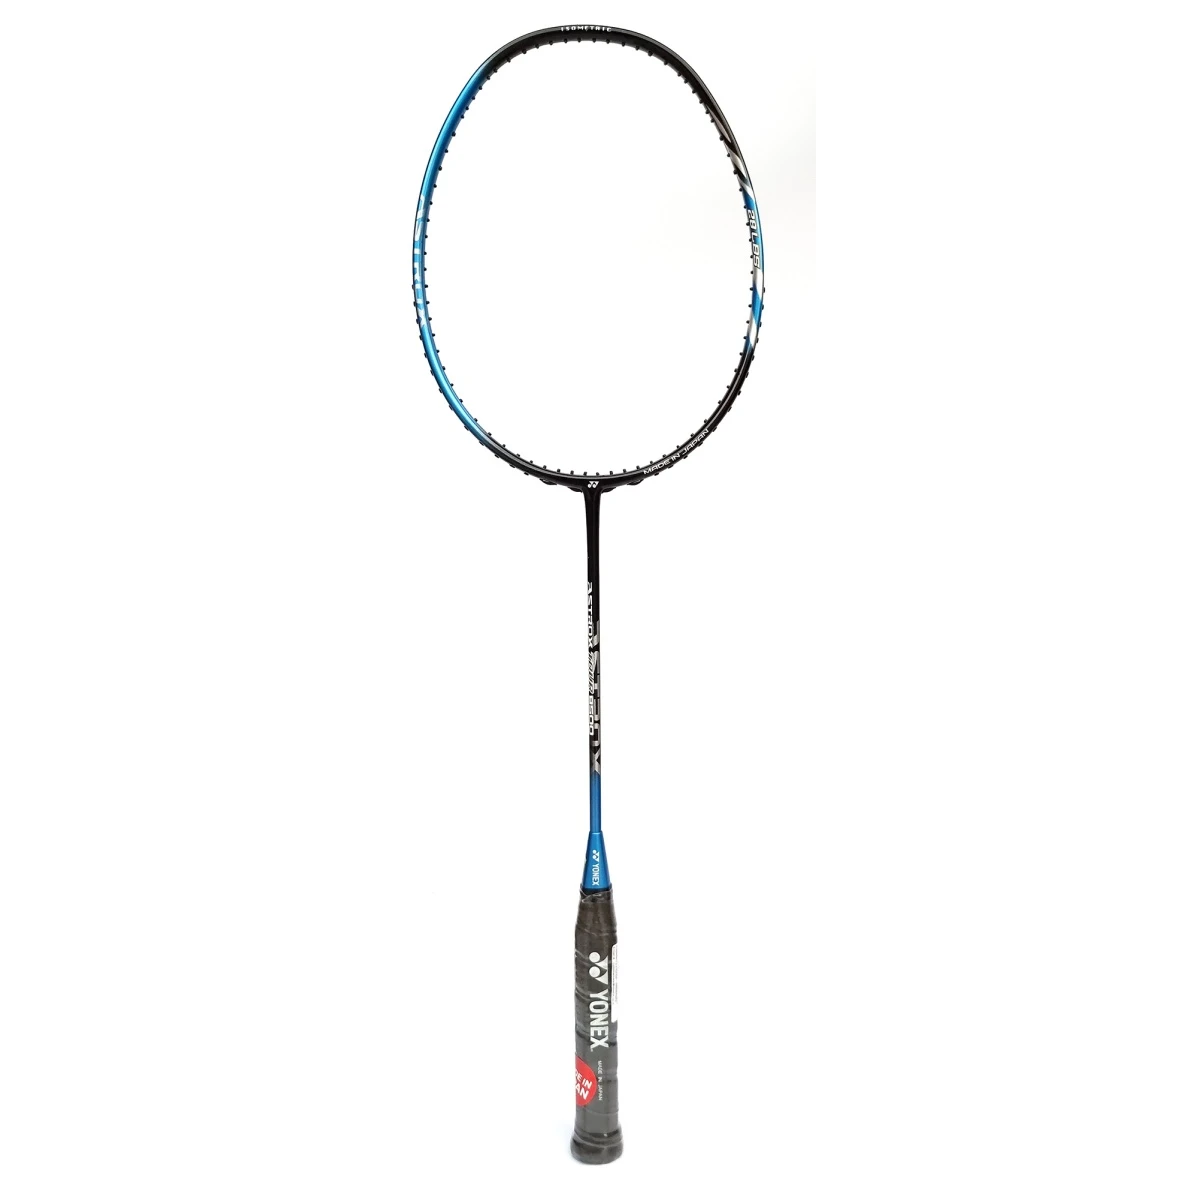 Buy Yonex Astrox Tour 8500 Badminton Racket